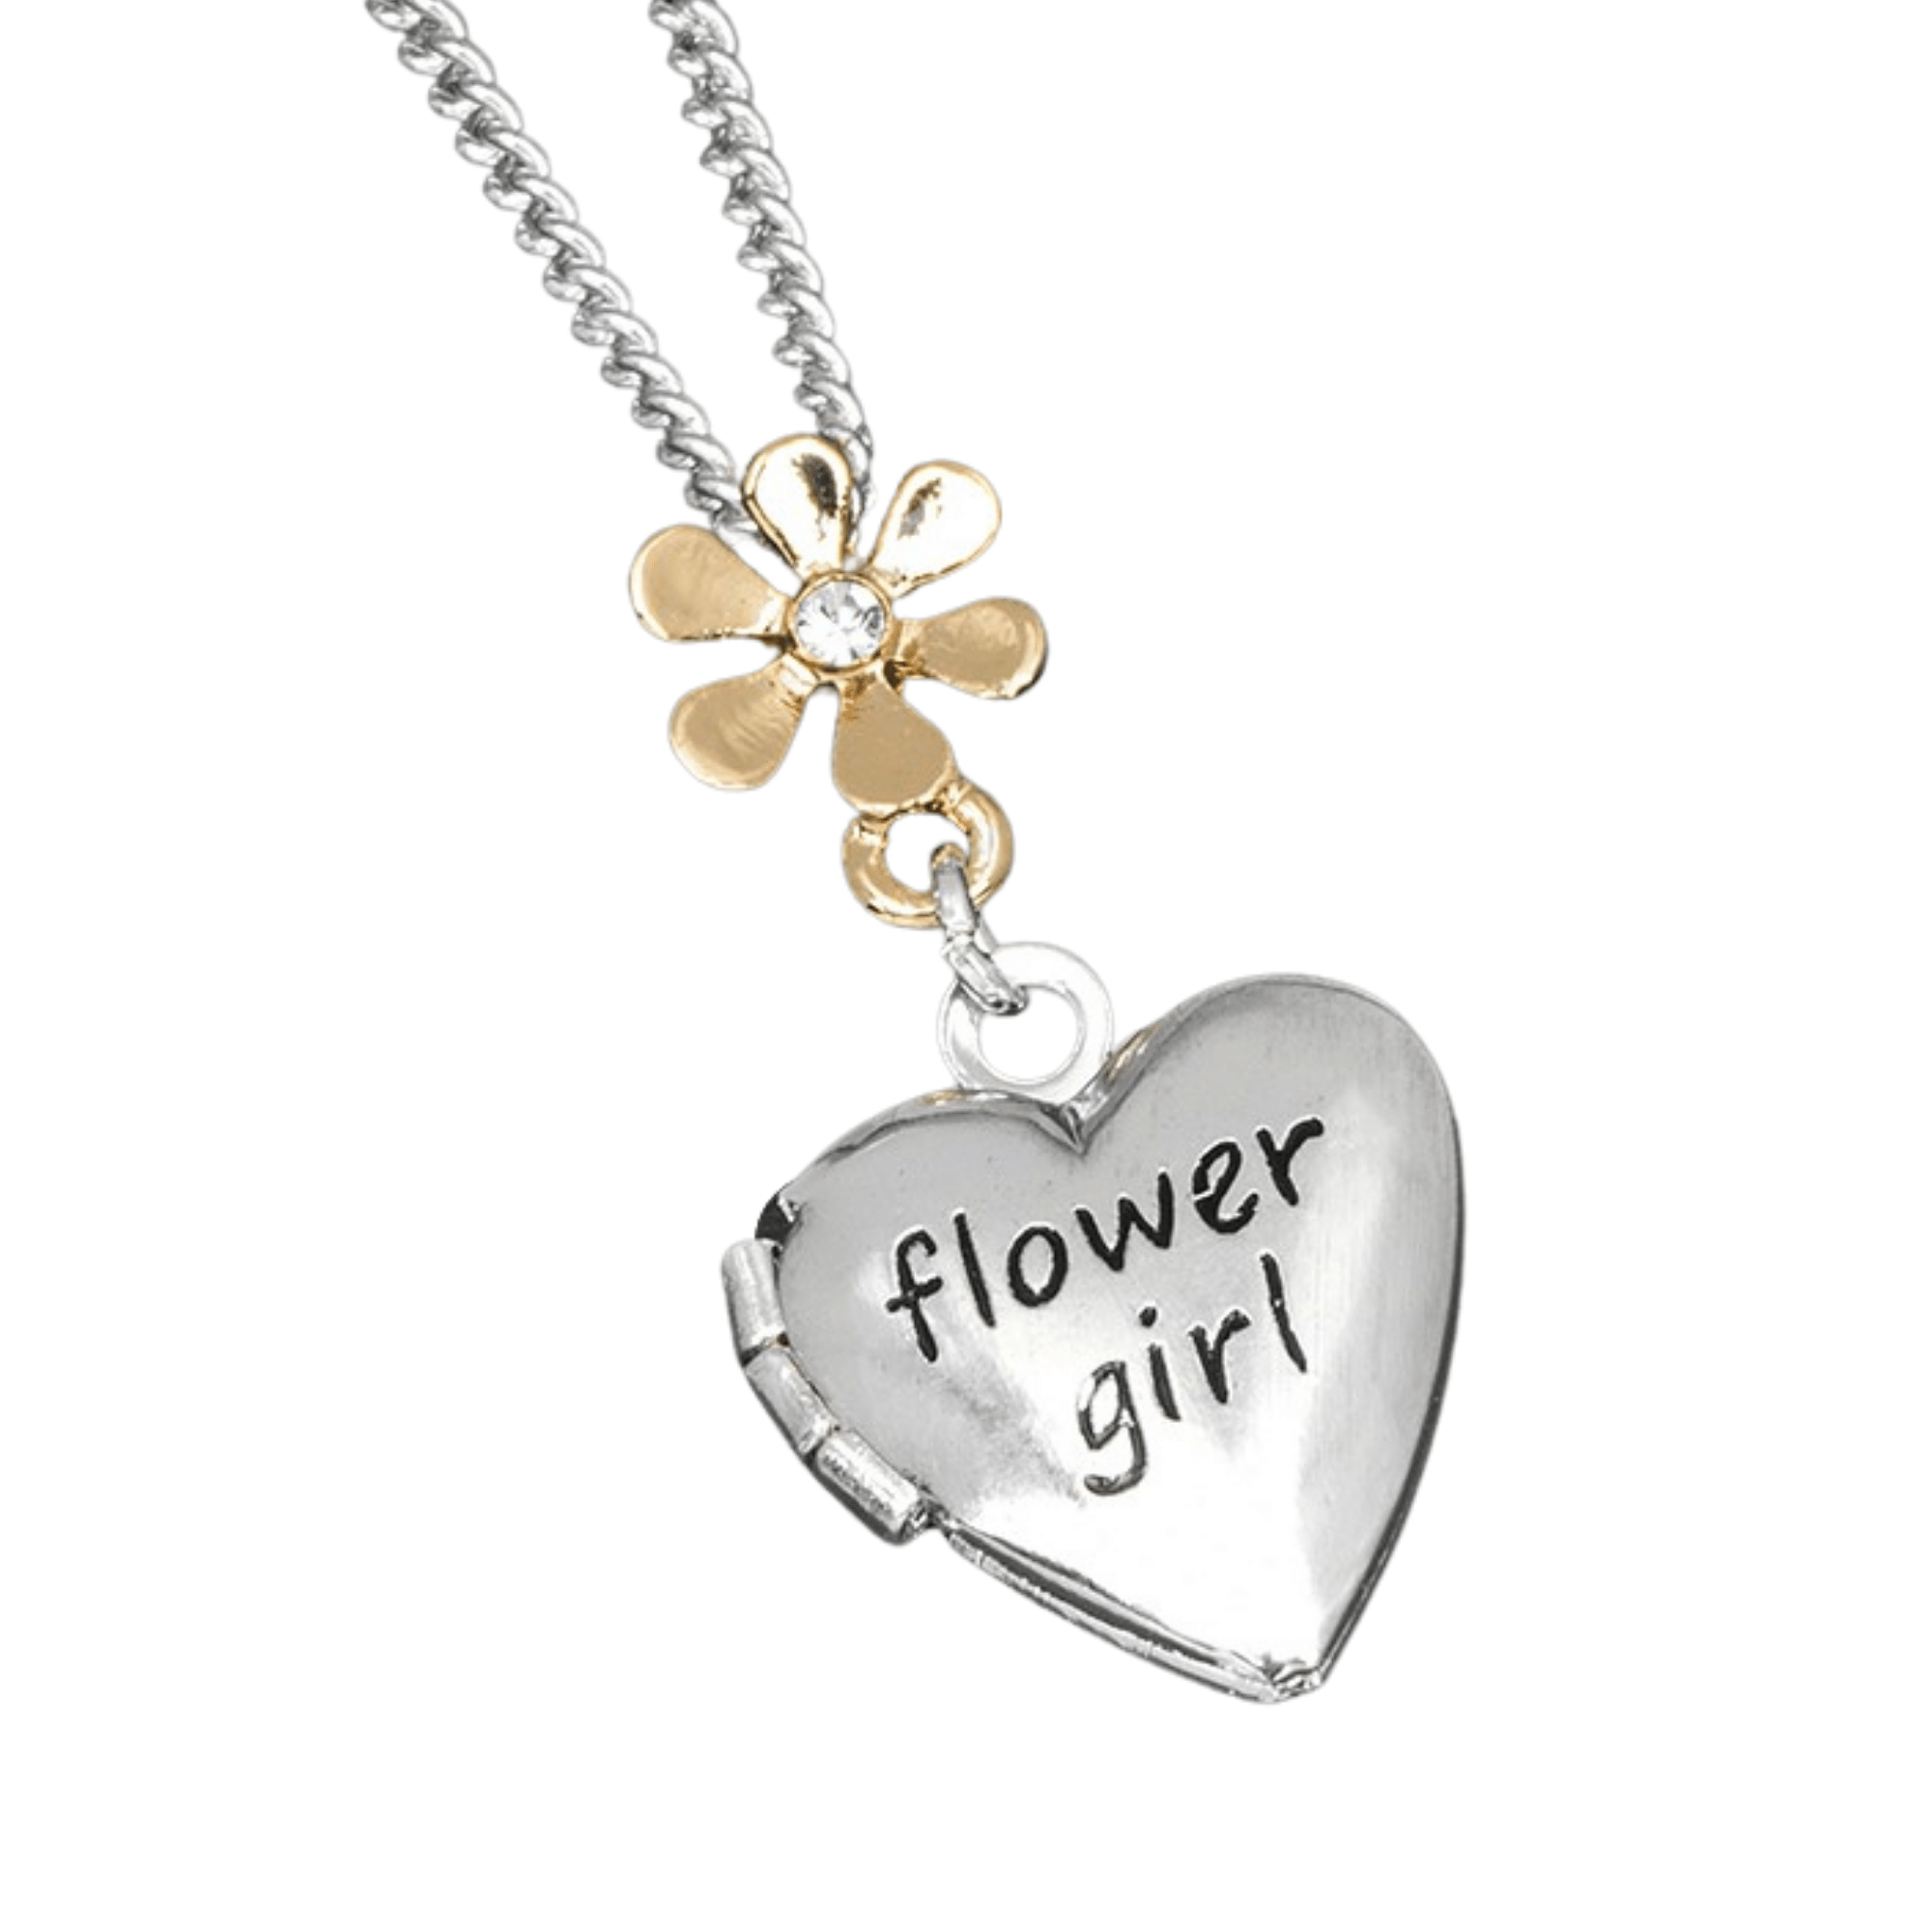 Girls Flowergirl Locket, Personalised Gift